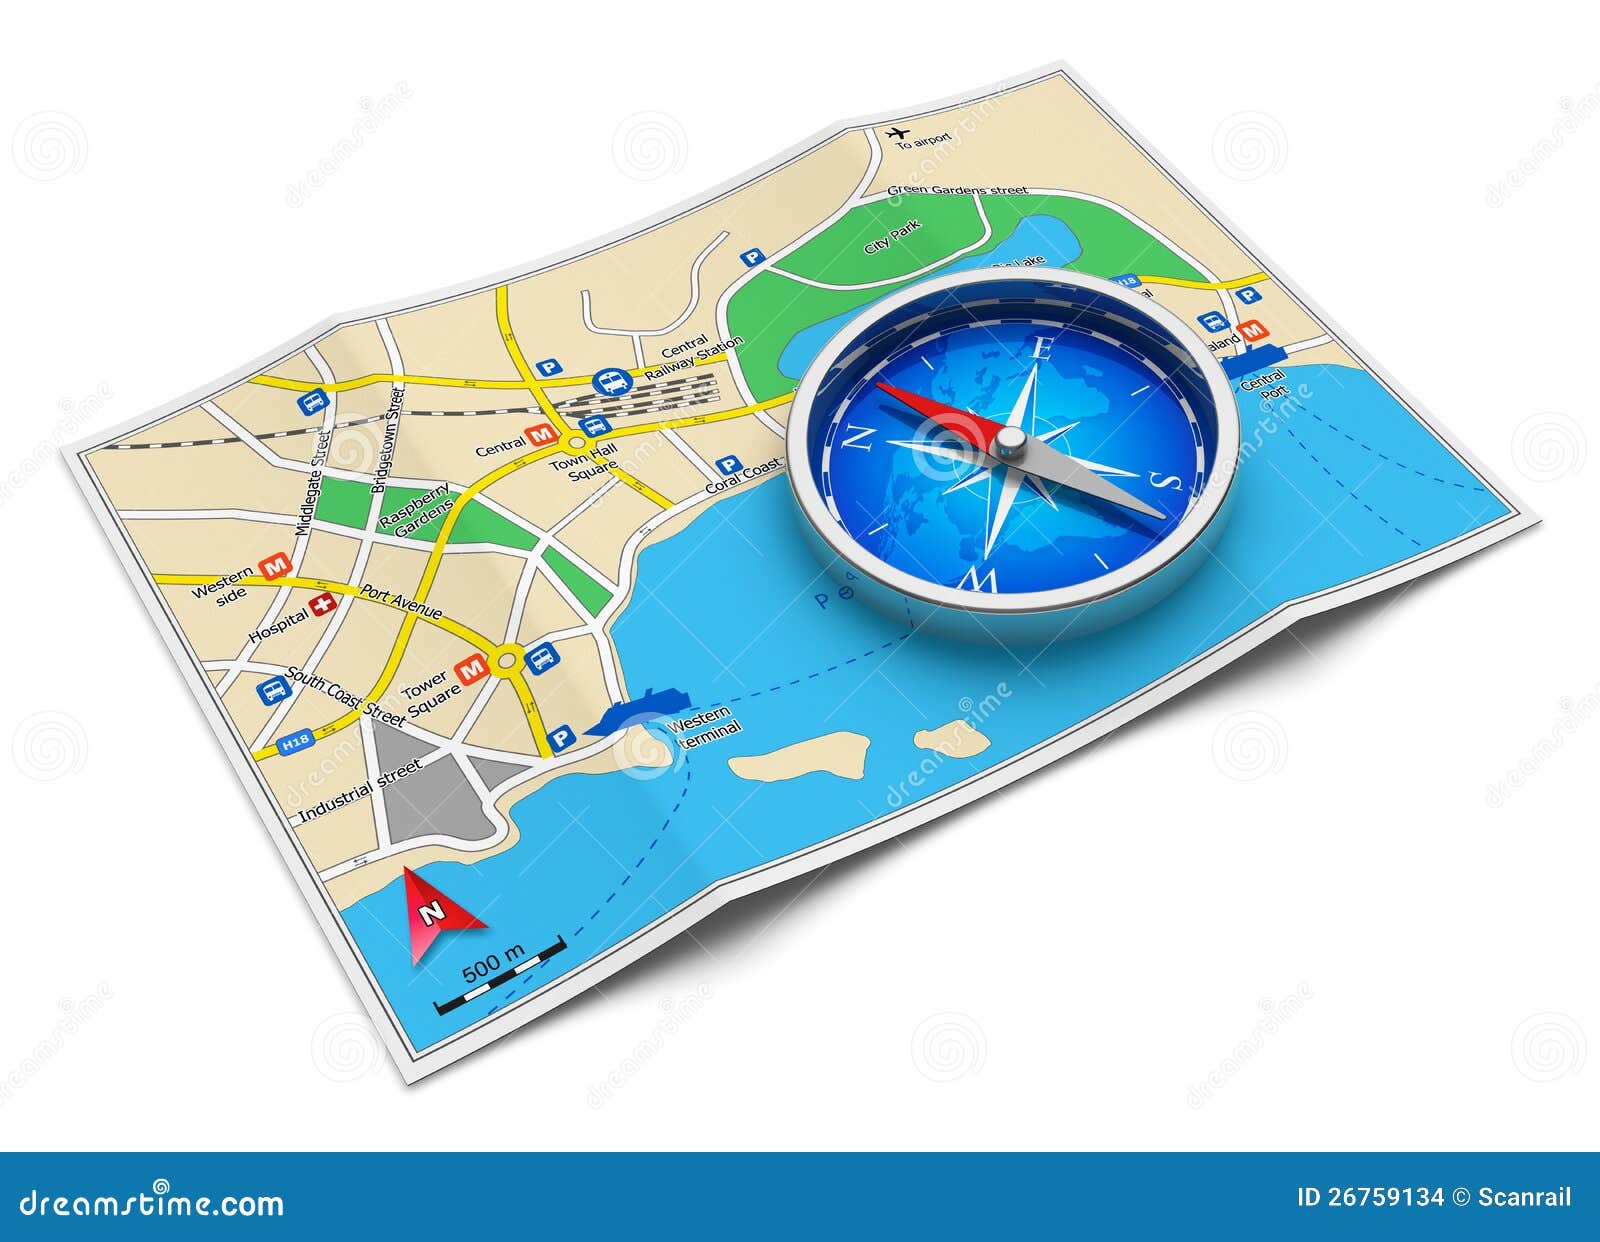 gps-navigation-travel-tourism-concept-26759134.jpg